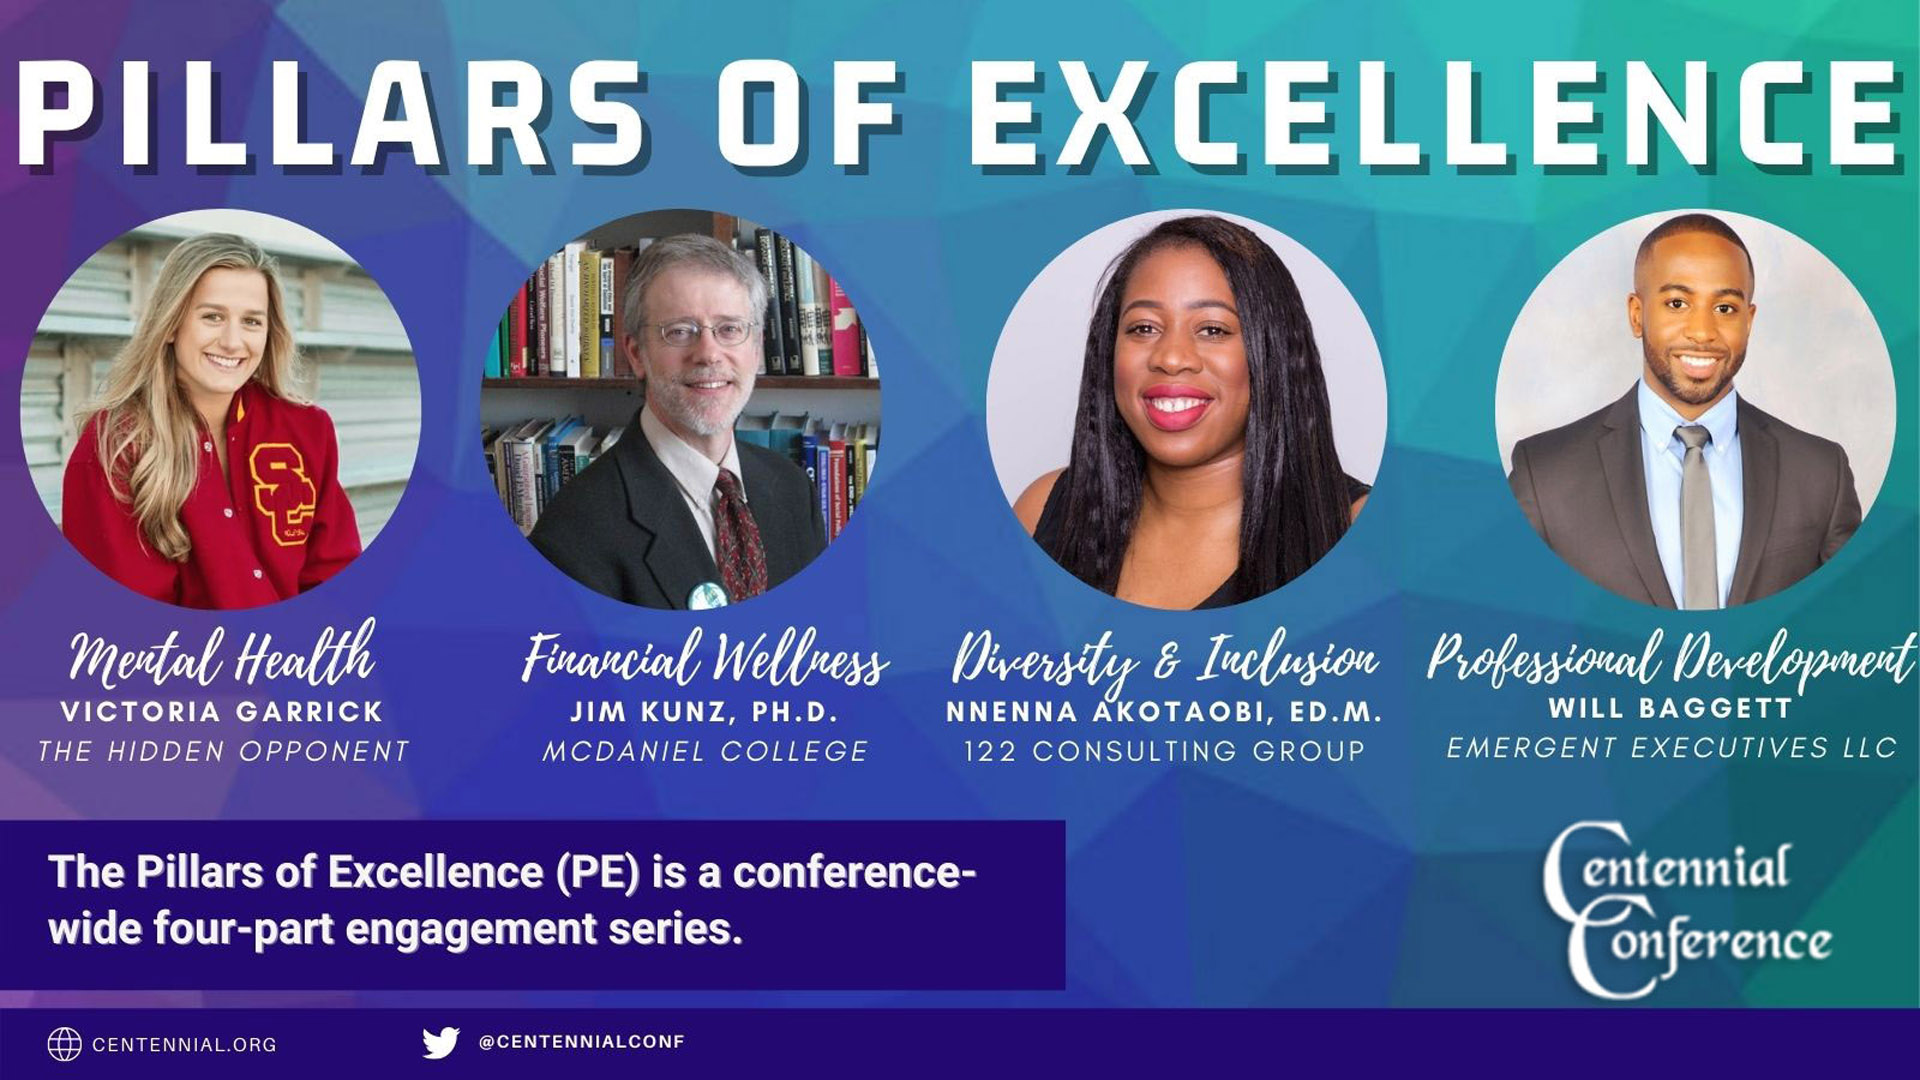 Centennial Conference Announces Pillars of Excellence